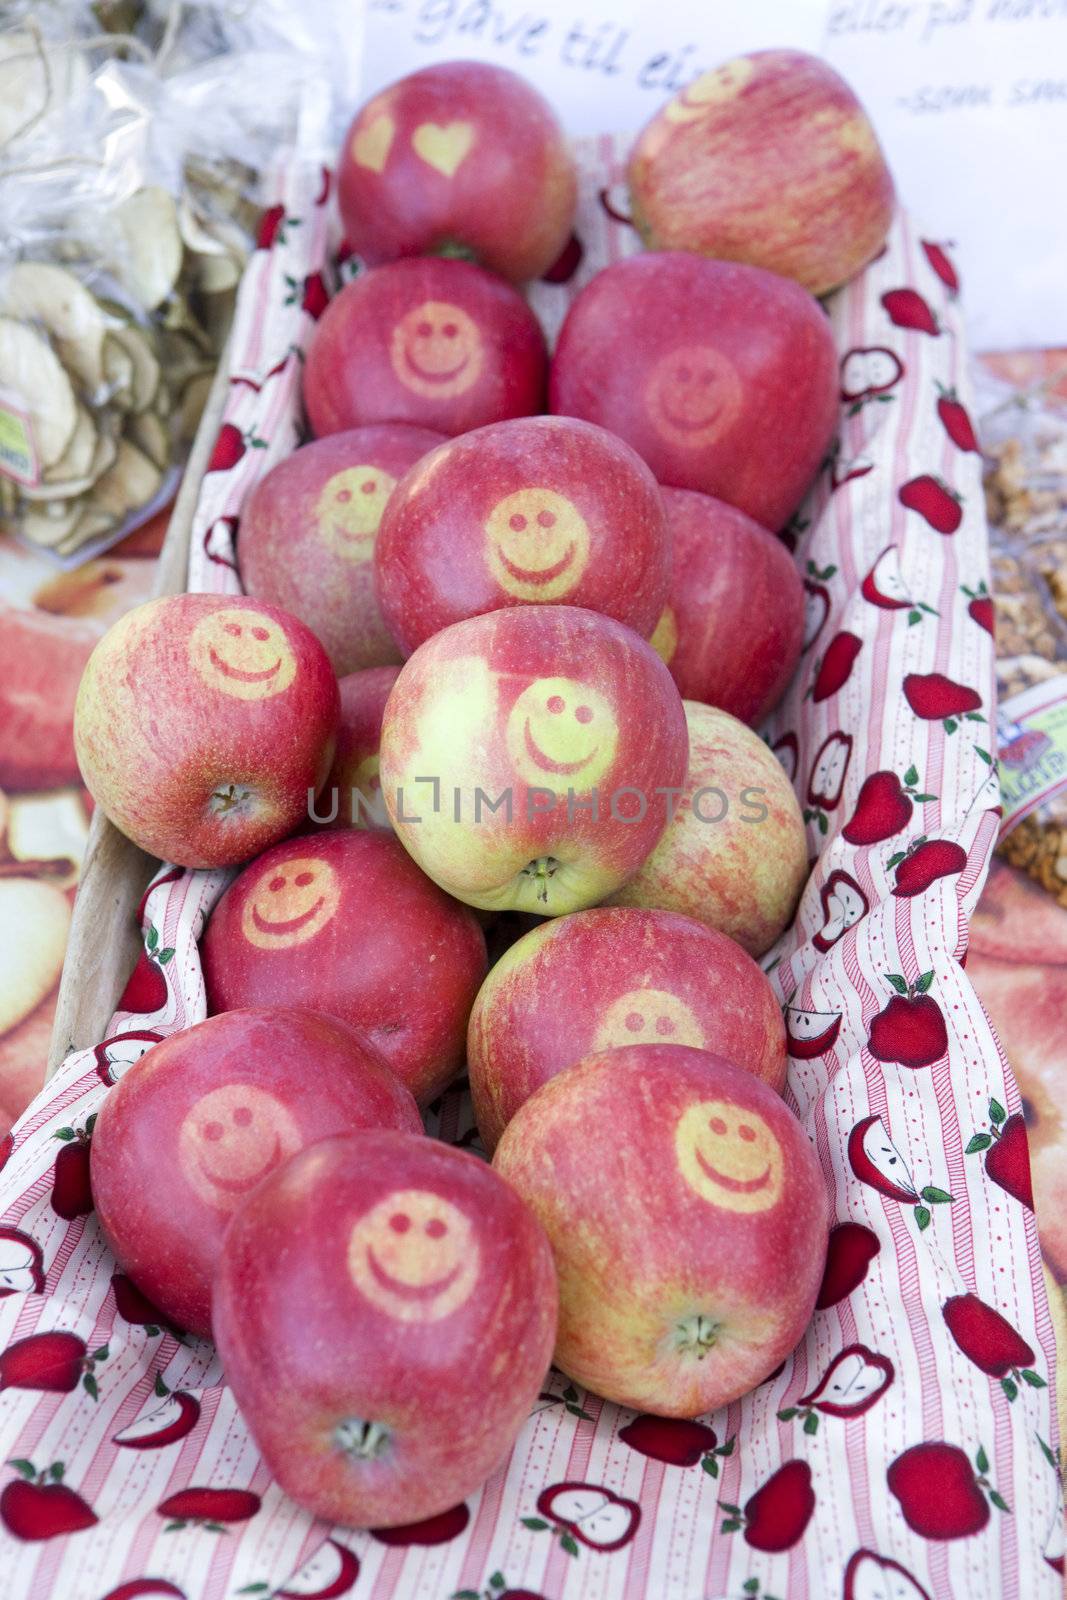 apples, street market in Bergen, Norway by phbcz